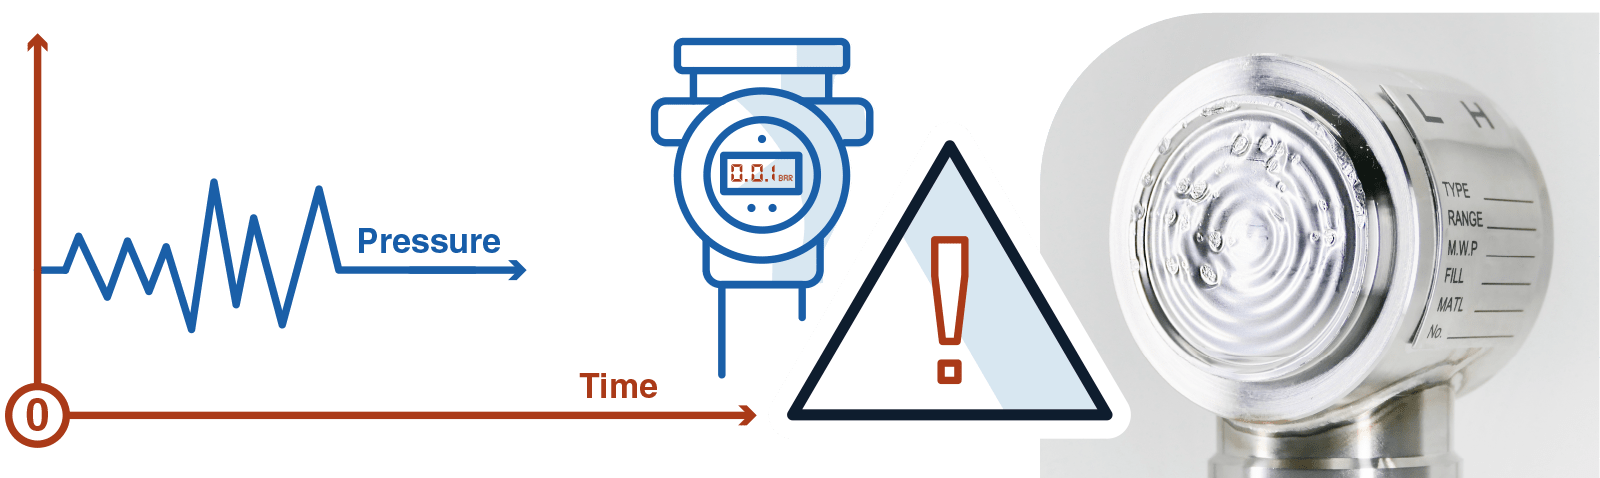 hata-ölçüm-basınç-sensörü-due-a-l-mekanik-ölçüm-tr